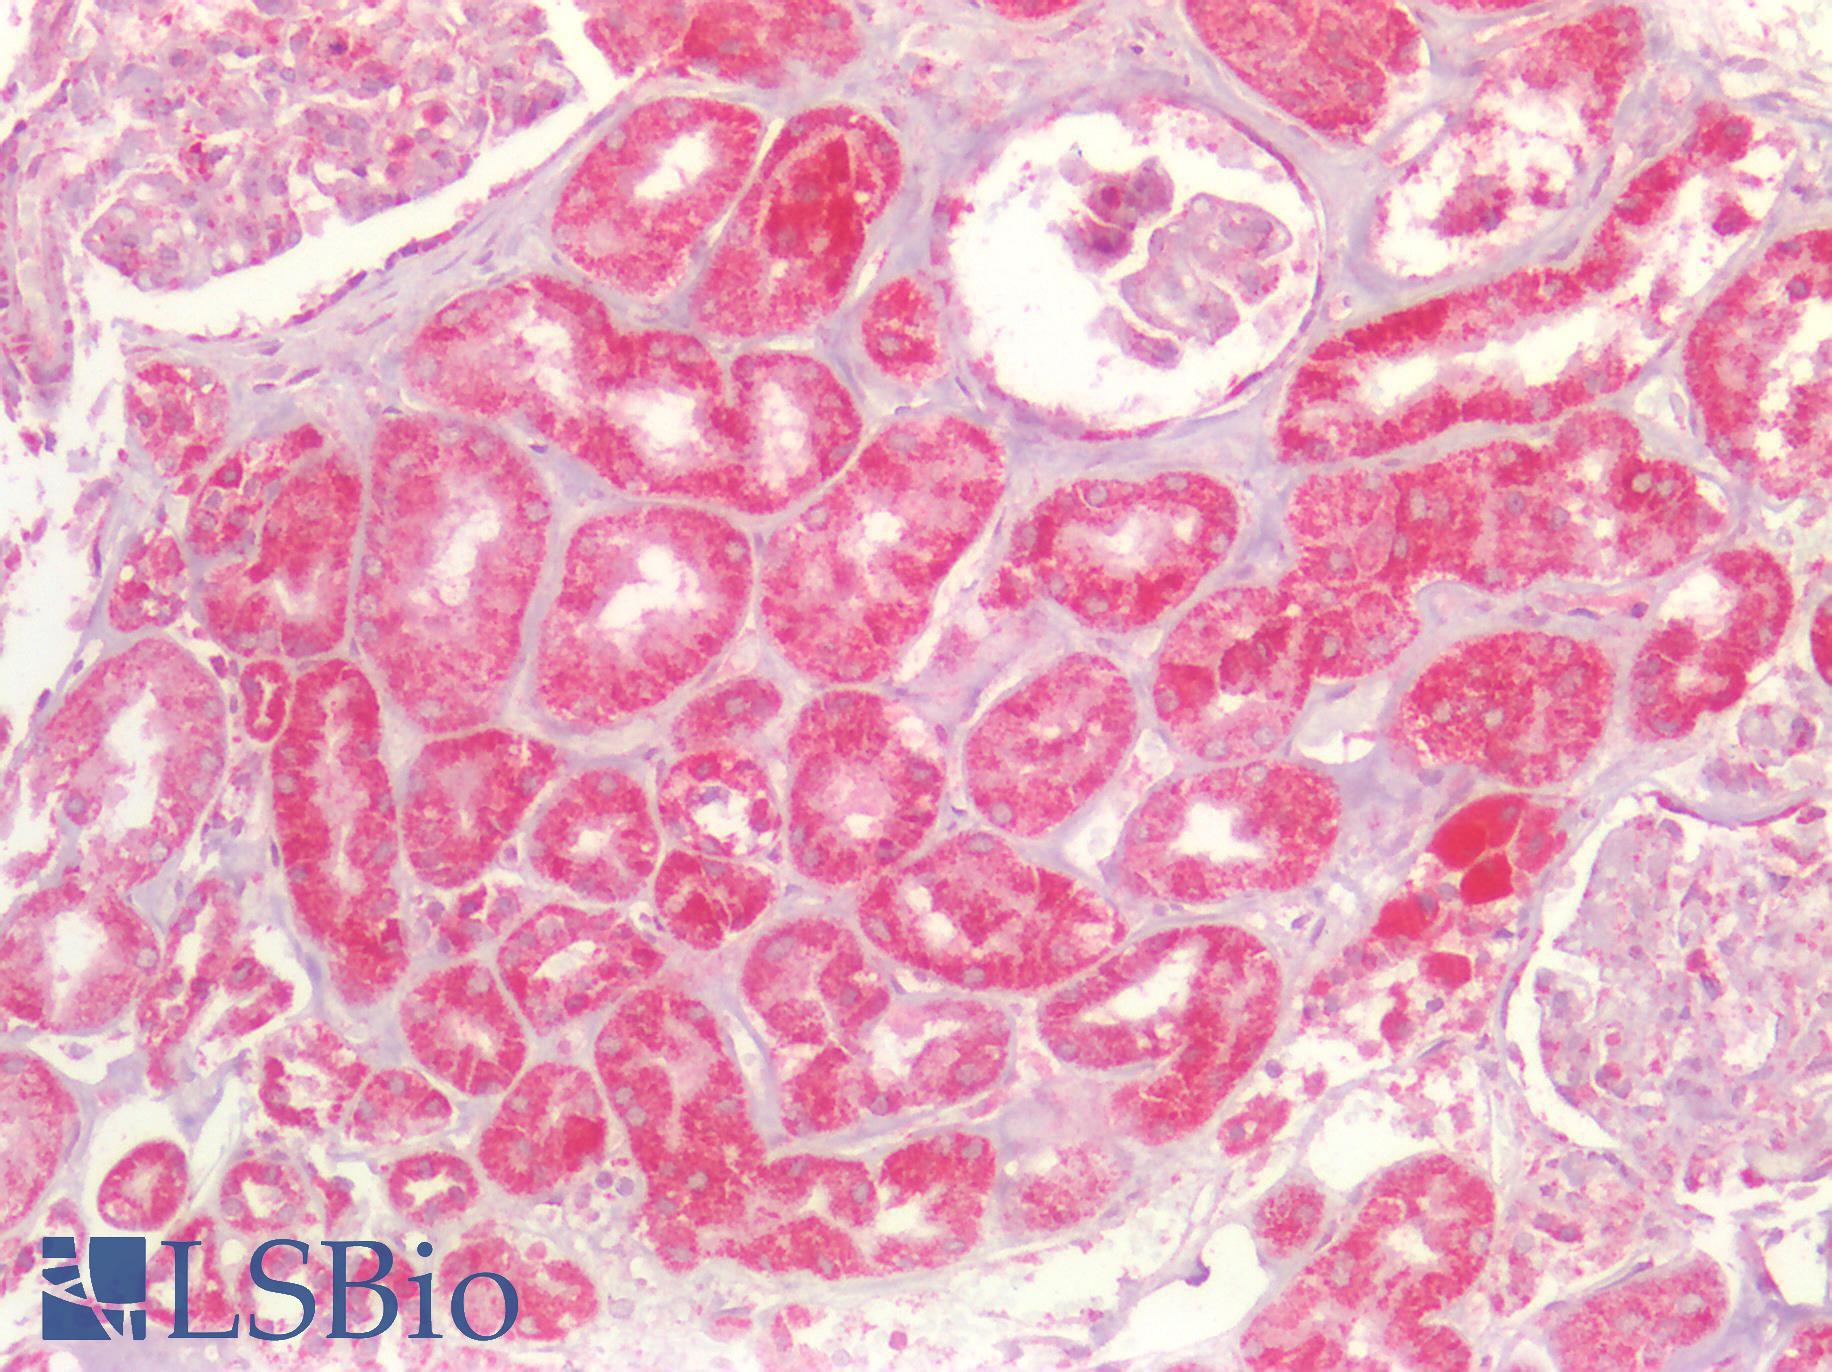 SDHB Antibody - Human Kidney: Formalin-Fixed, Paraffin-Embedded (FFPE)